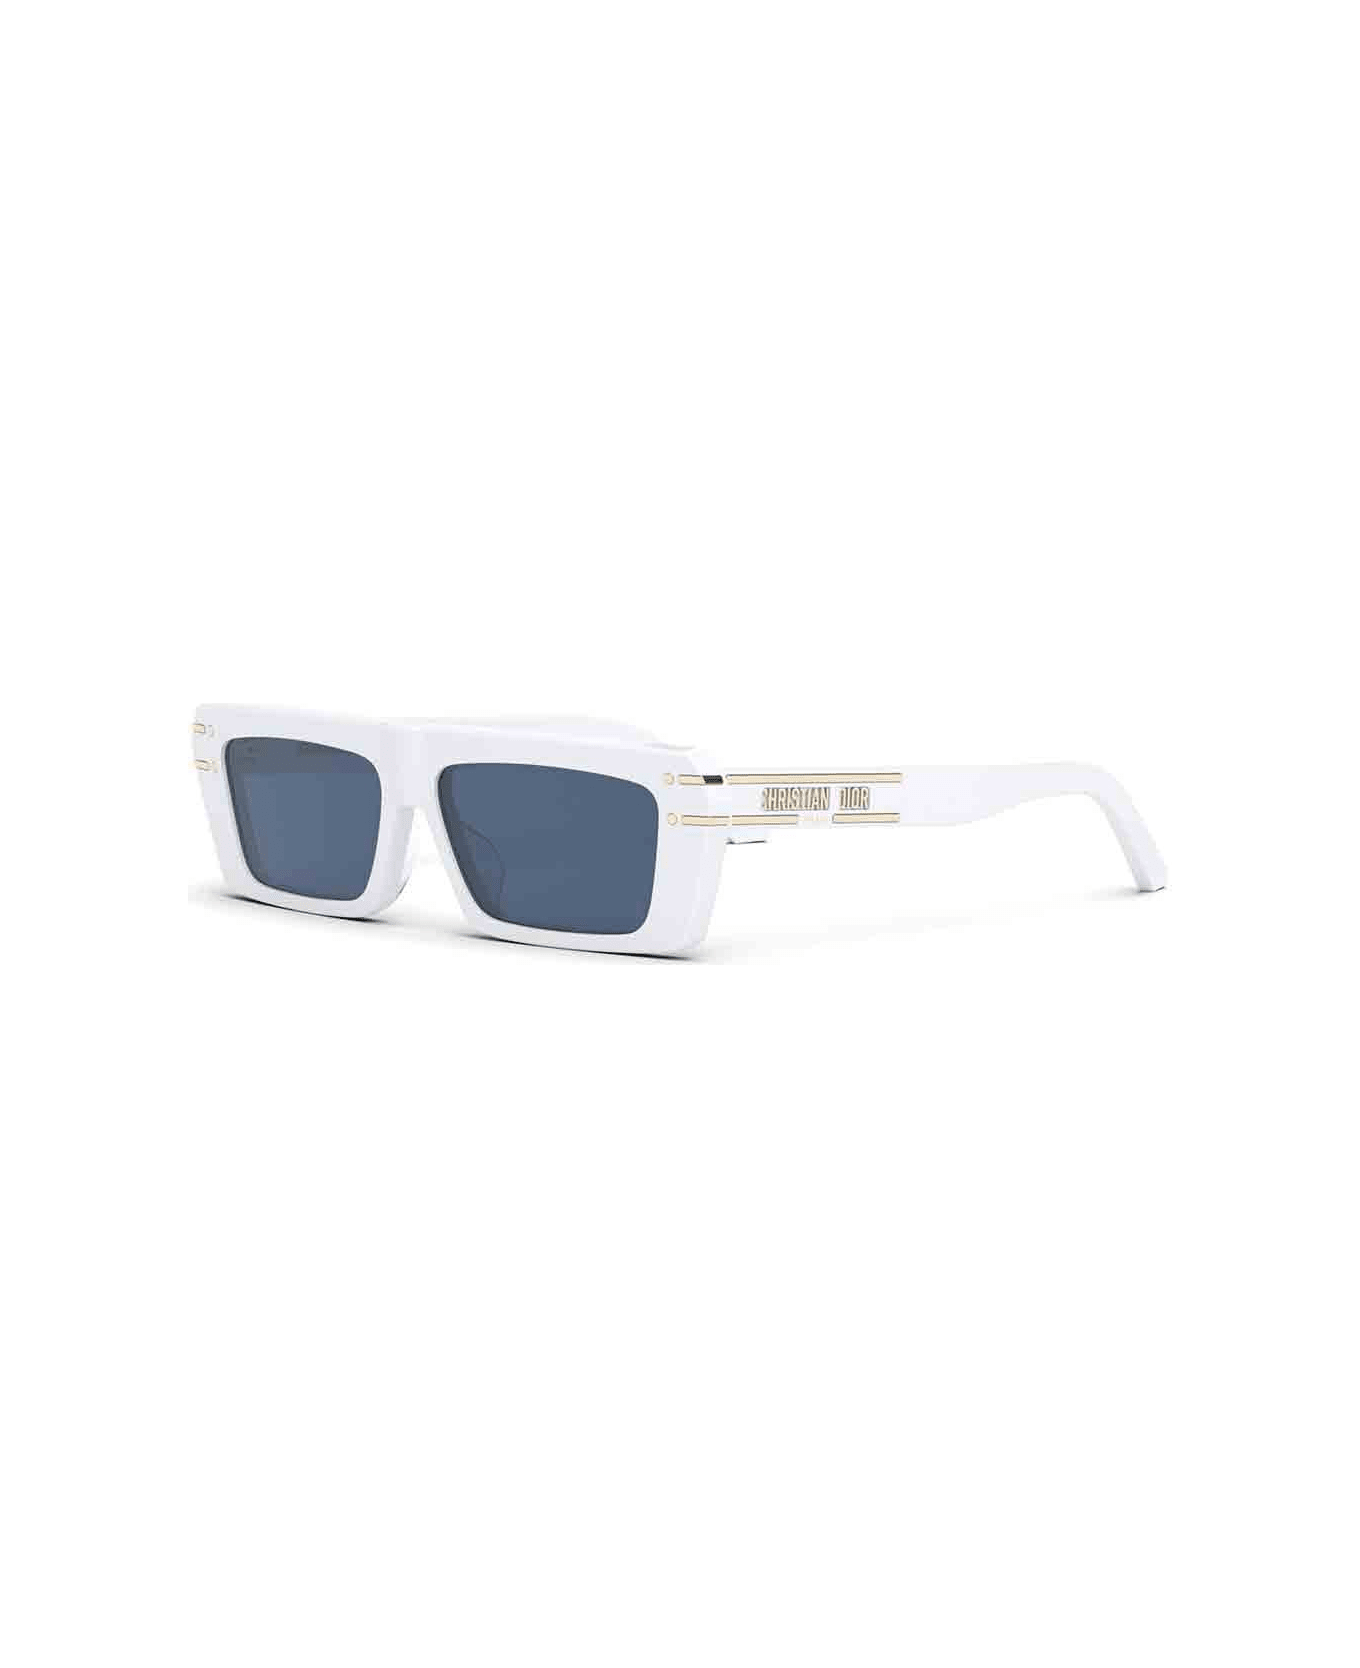 Dior Eyewear Sunglasses - Bianco/Blu サングラス